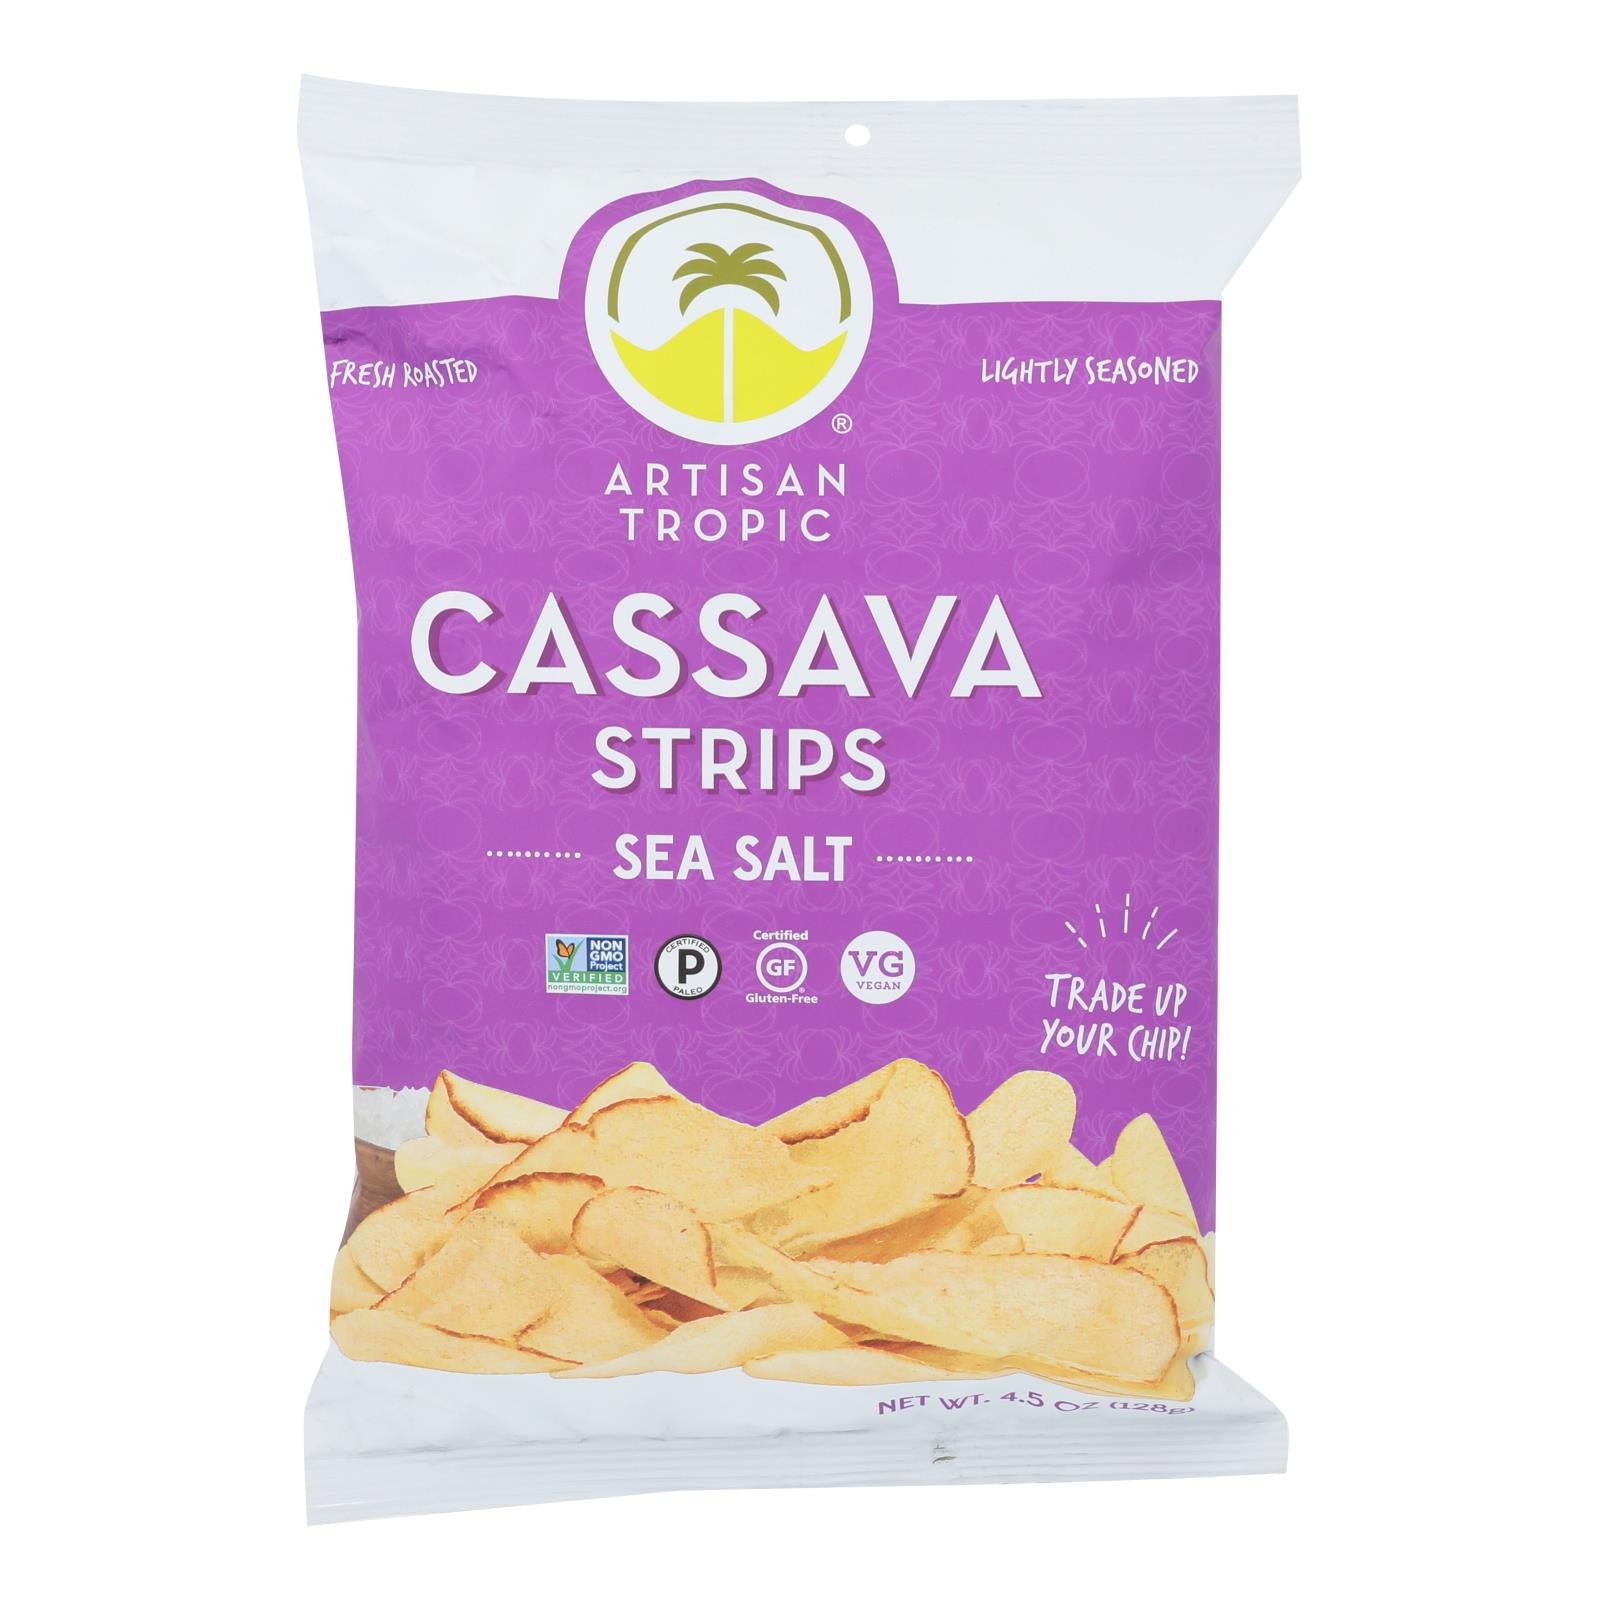 Artisan Tropic, Artisan Tropic Cassava Strips - Sea Salt - Case of 12 - 4.5 oz. (Pack of 12)